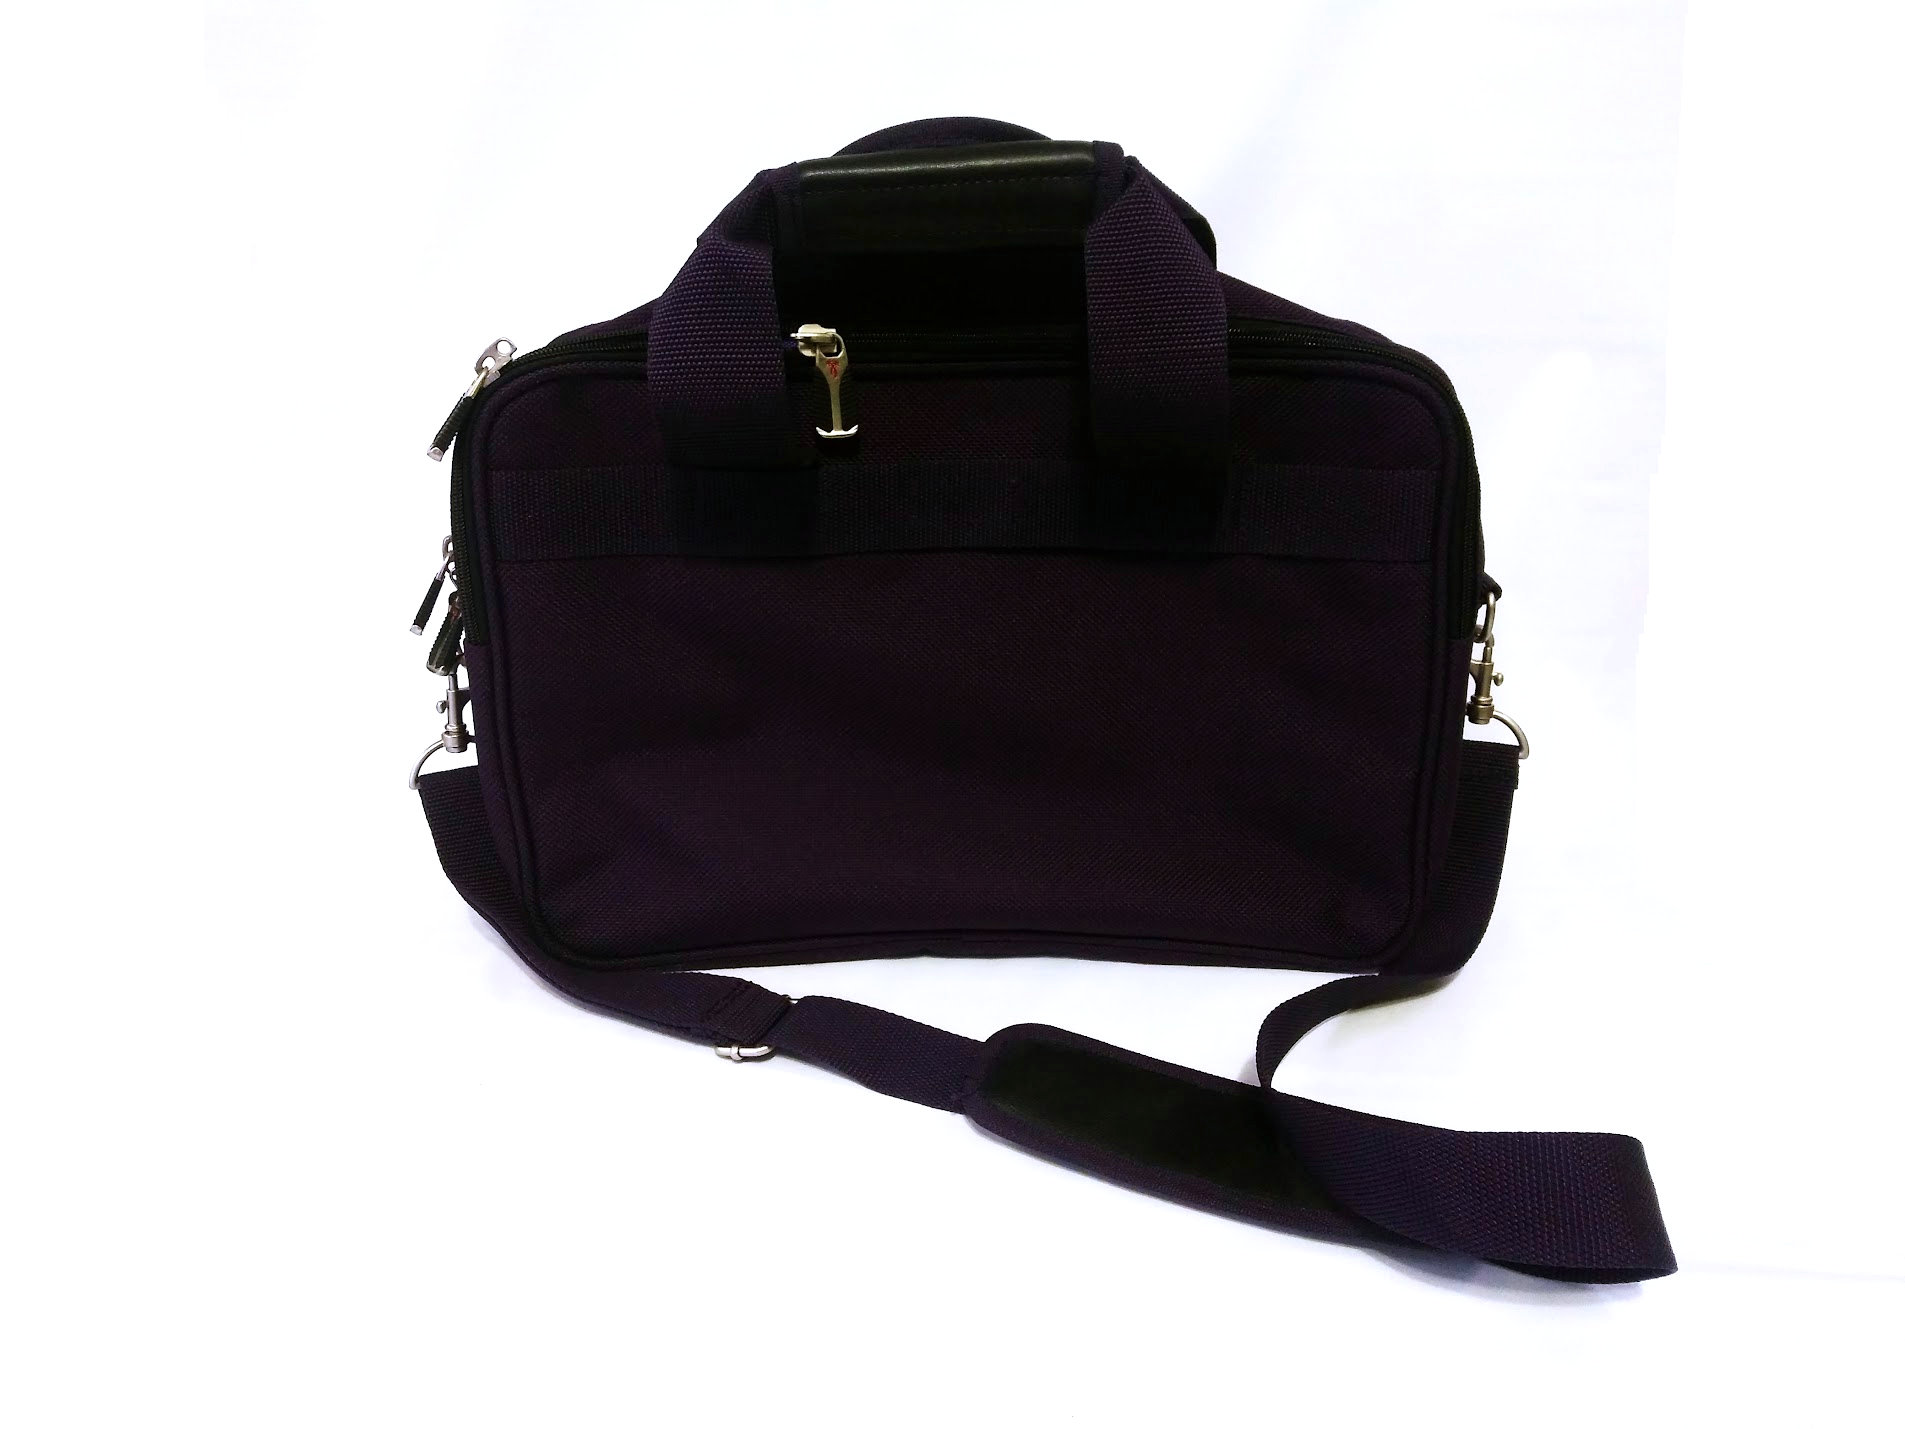 Ricardo Beverly Hills Travel Bag (Purple)